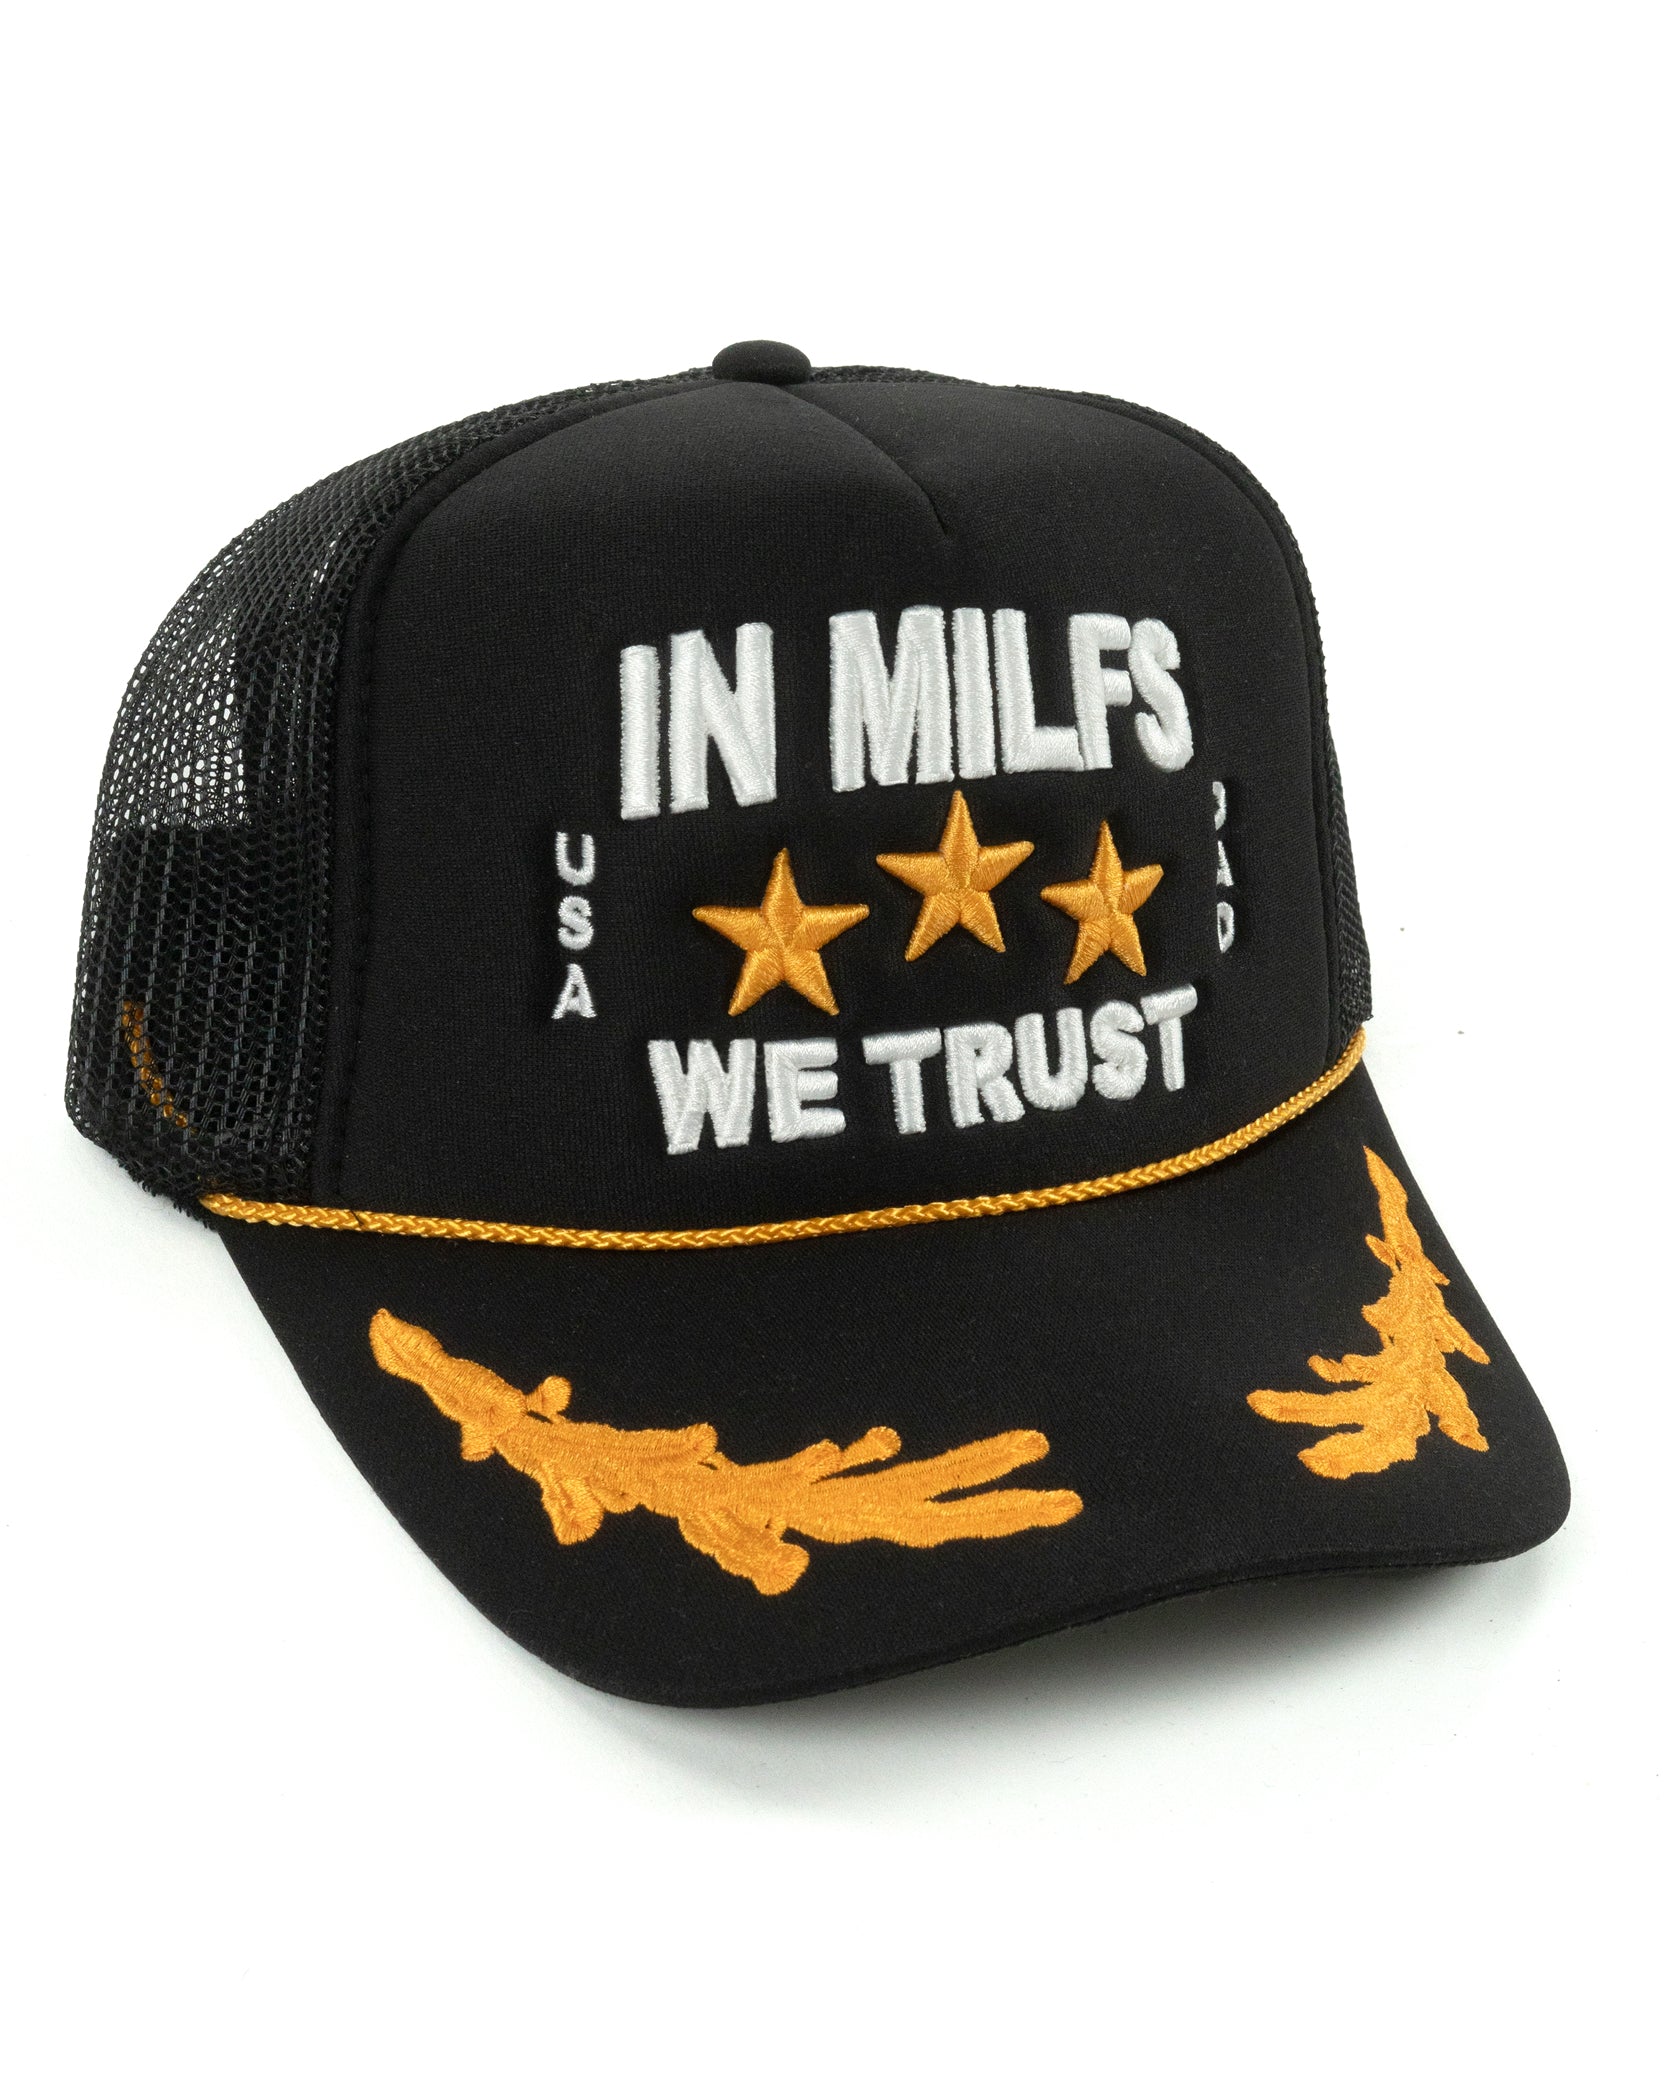 In MlLFS We Trust Captain's Hat - Black